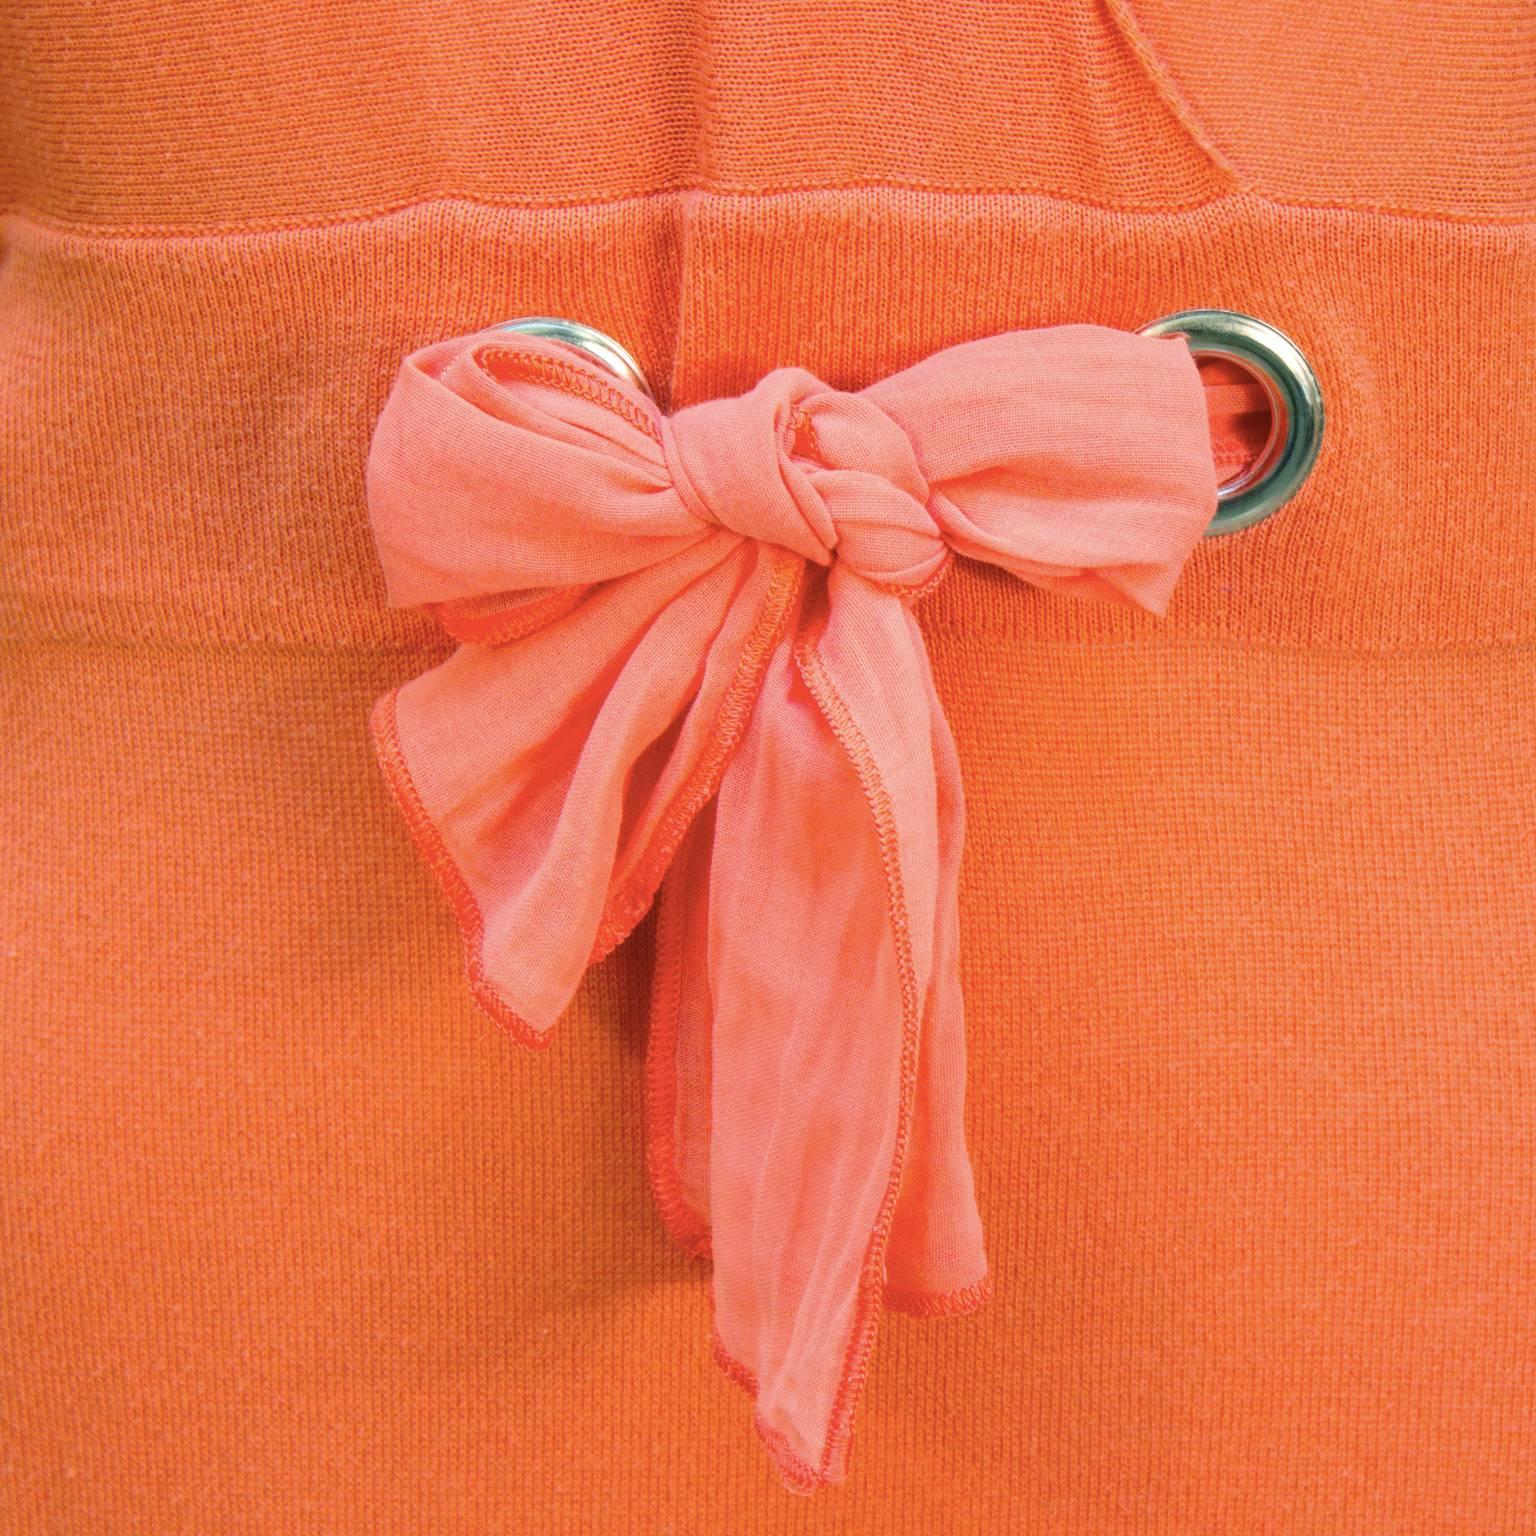 Women's 1990's Chloe Peach Sweater with Chiffon Tie 